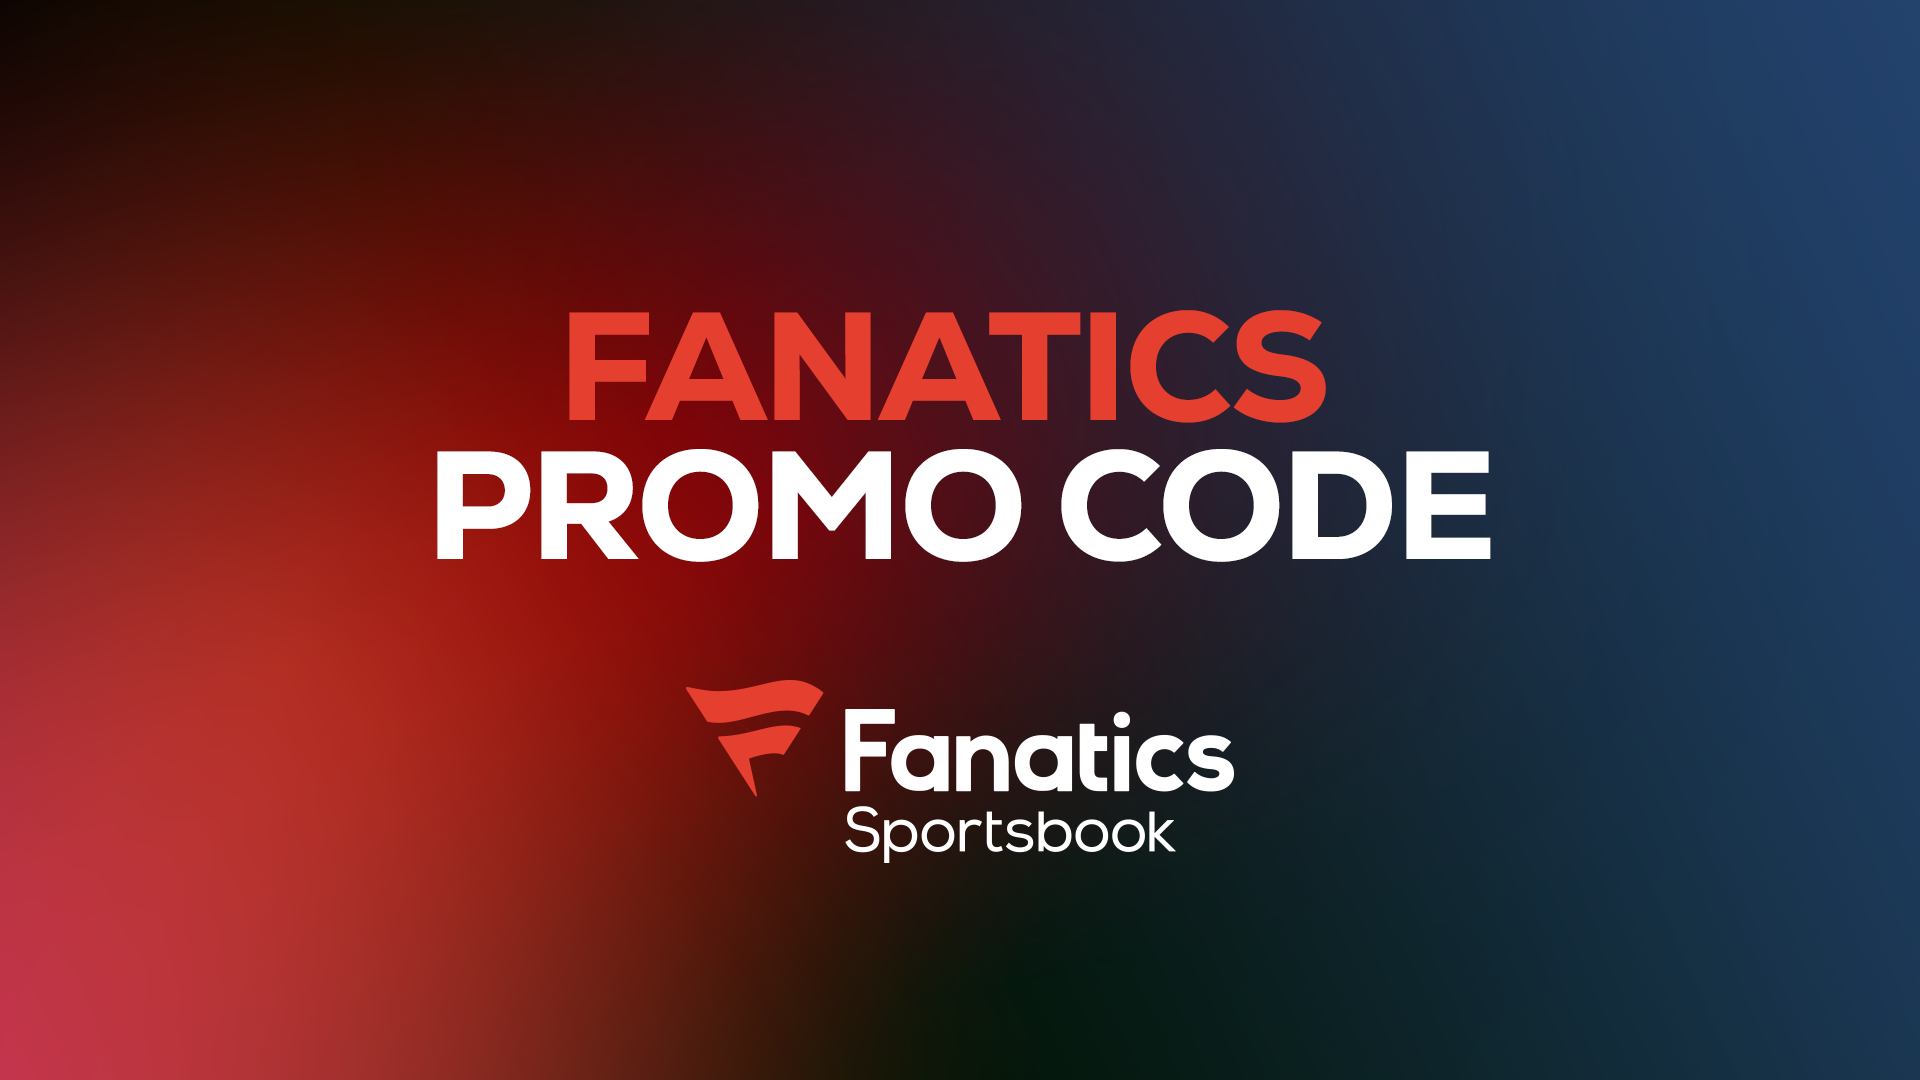 Fanatics Sportsbook promo: Net k bonus match for NBA + NHL Playoffs, MLB